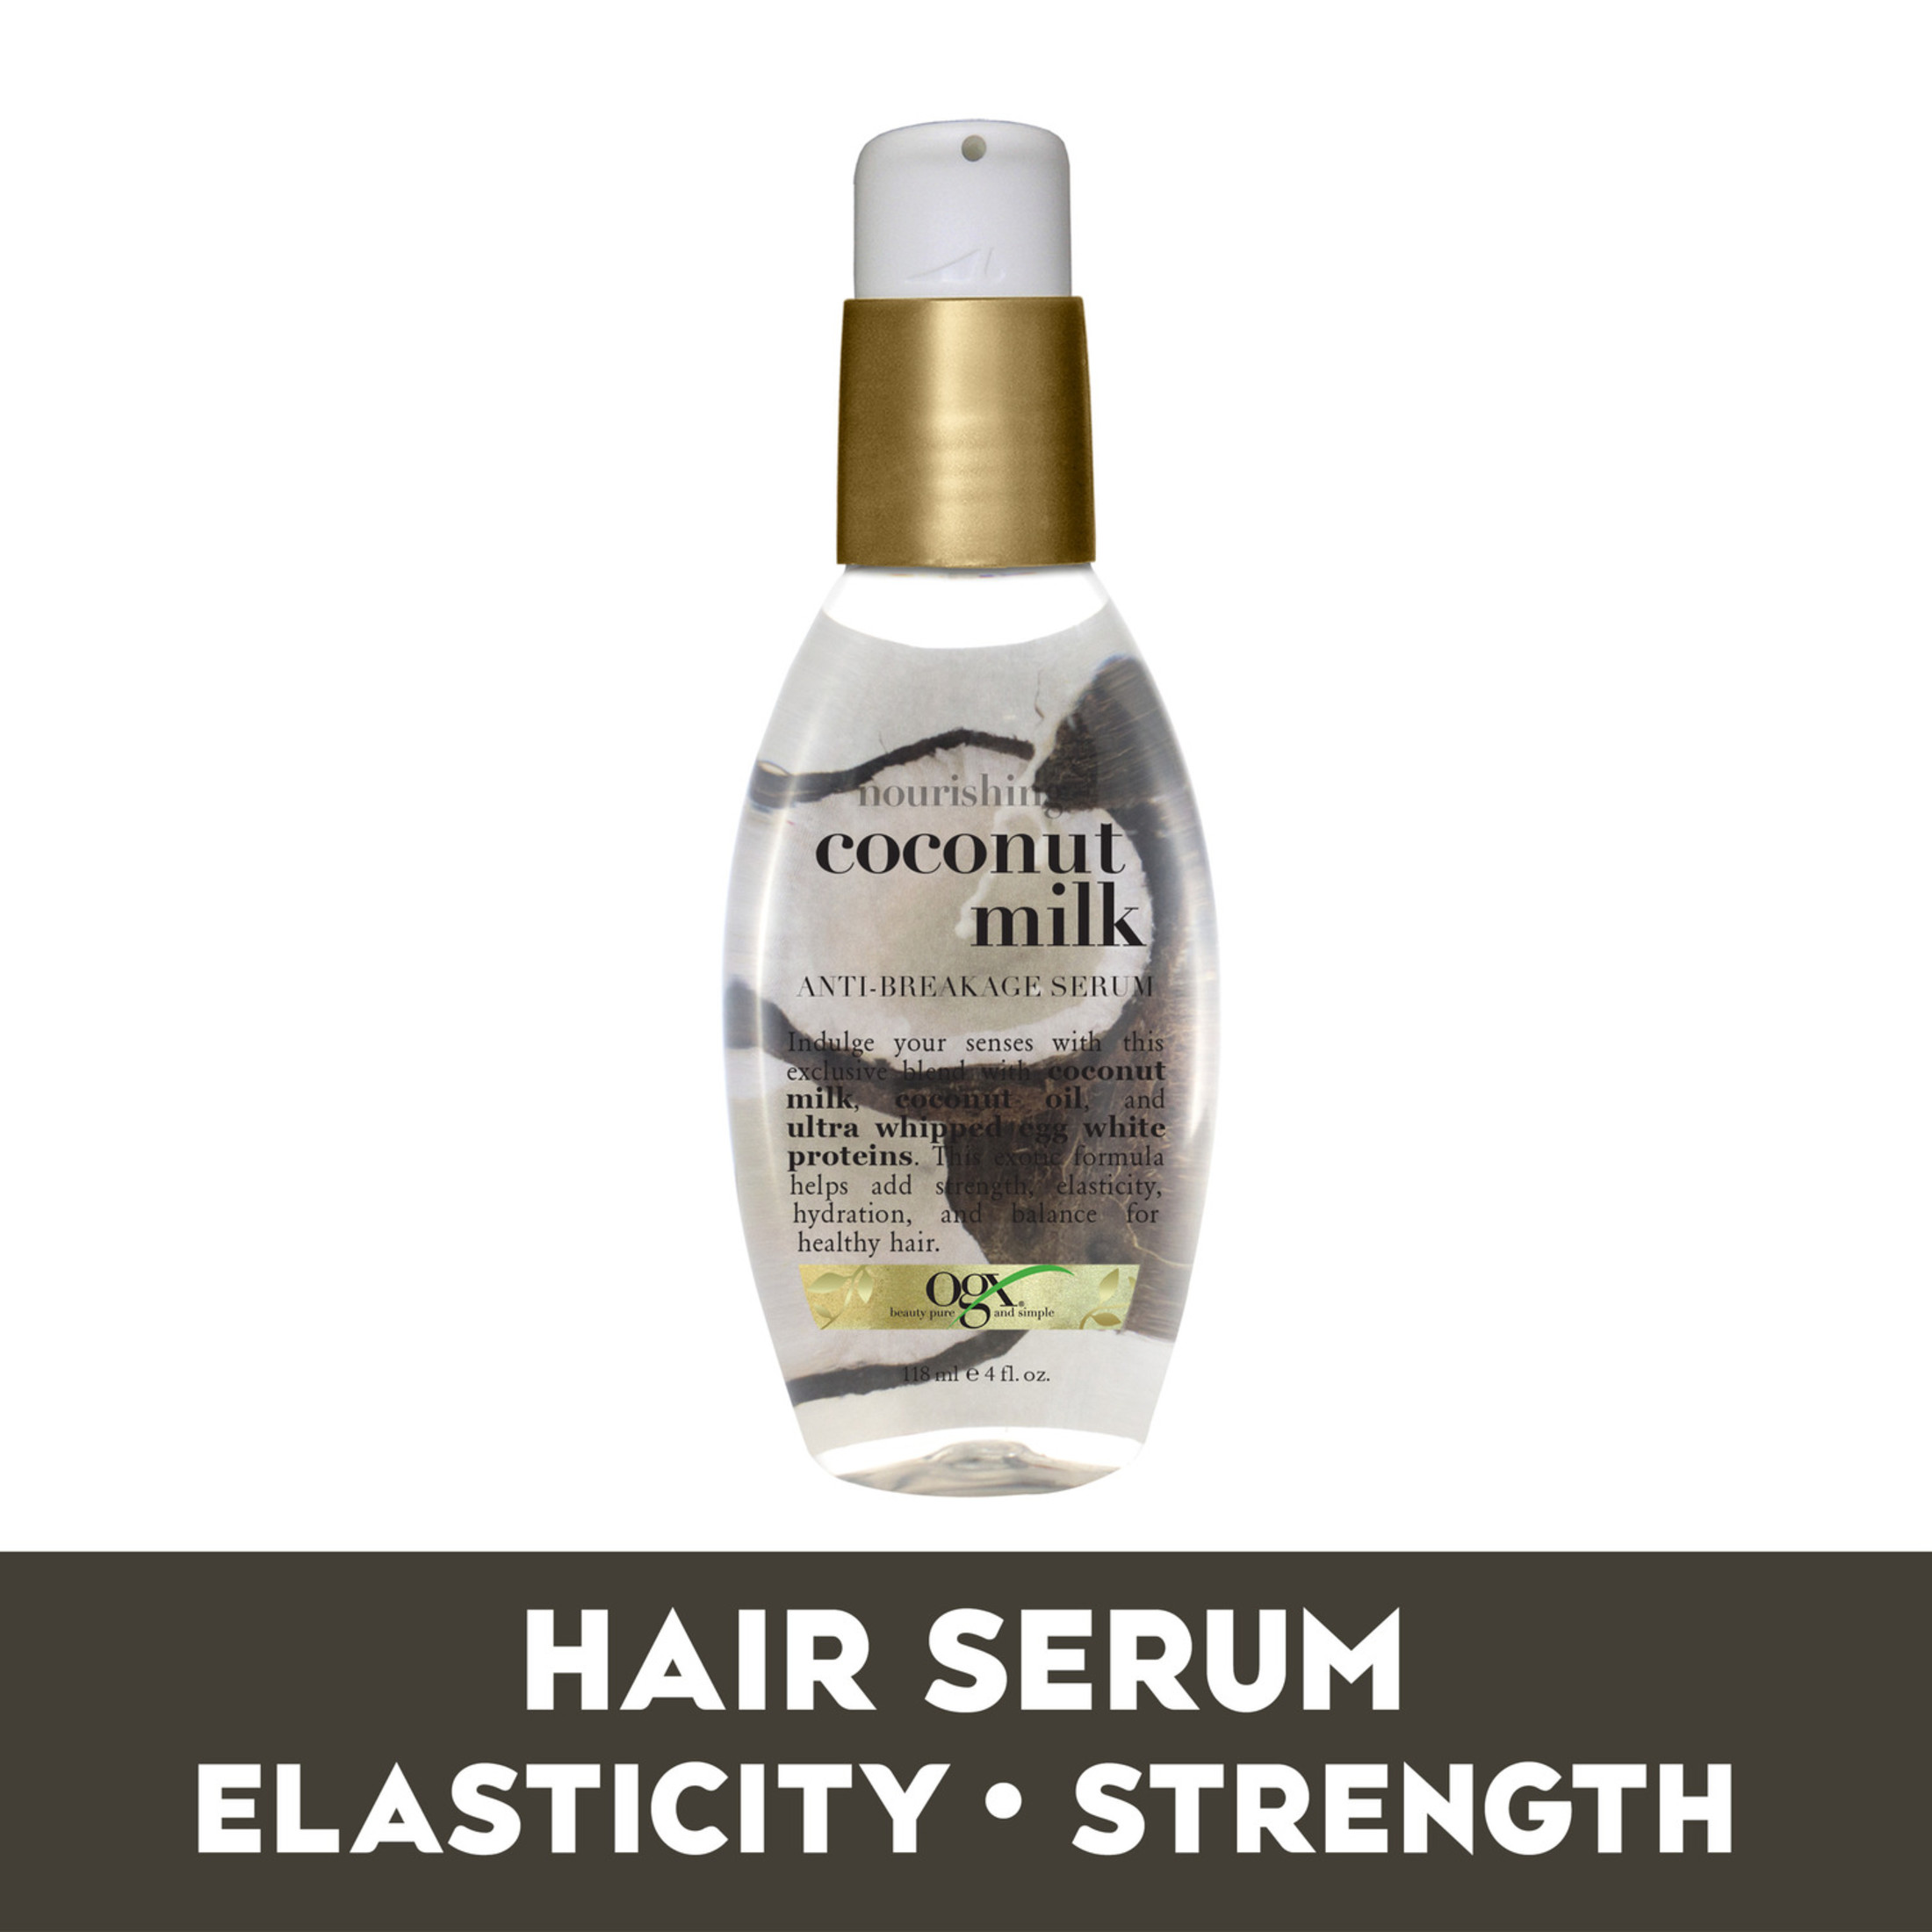 OGX Coconut Milk Moisturizing Strength & Shine, Leave-In Treatment Hair Serum, 4 fl oz - image 1 of 12